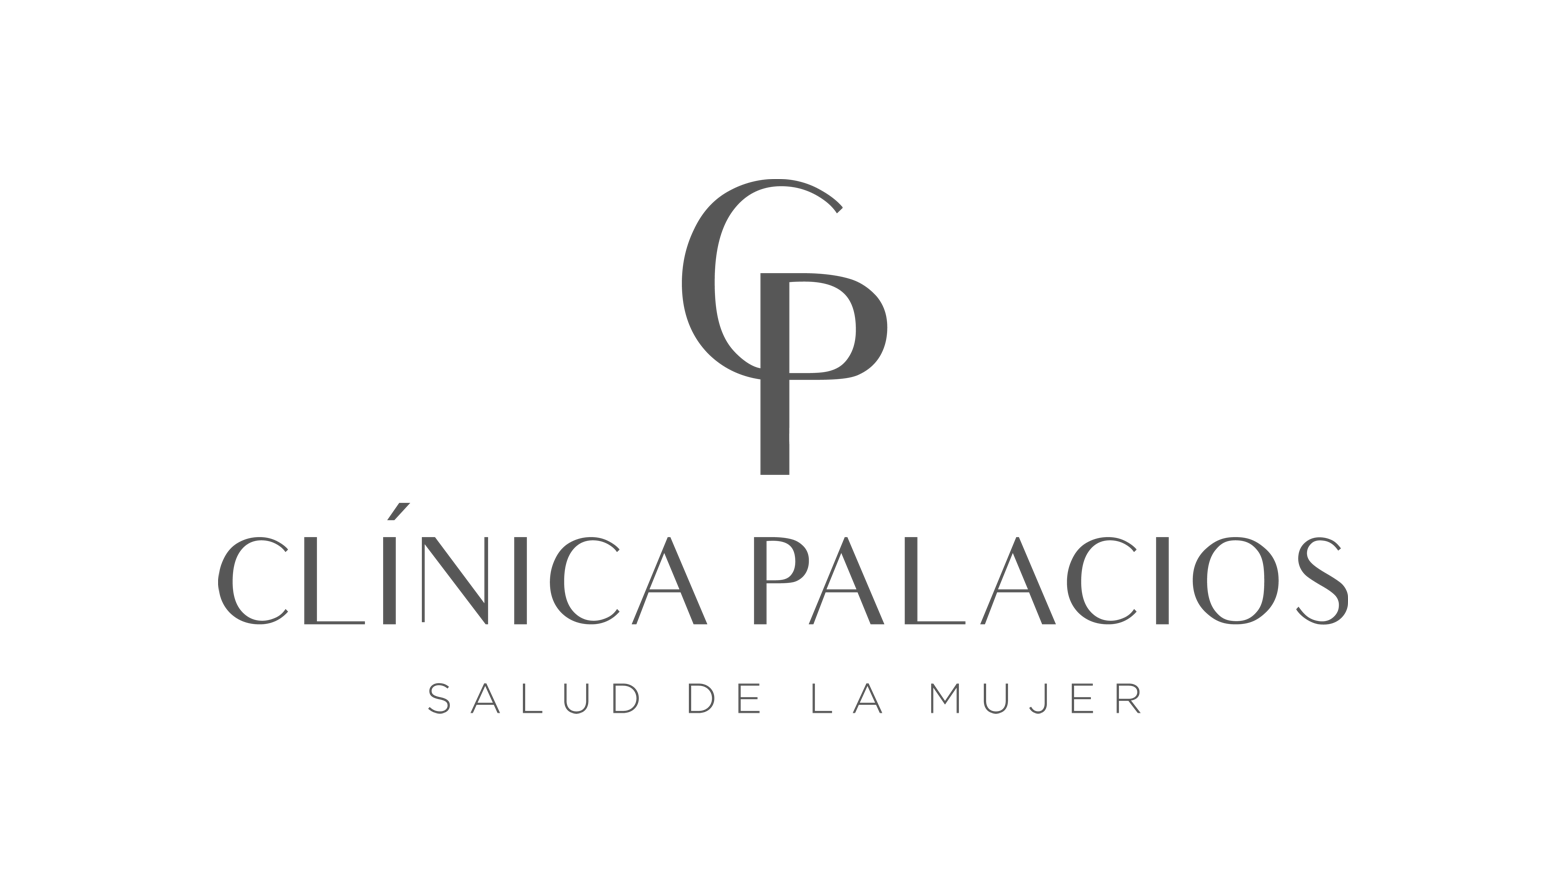 Clínica Palacios